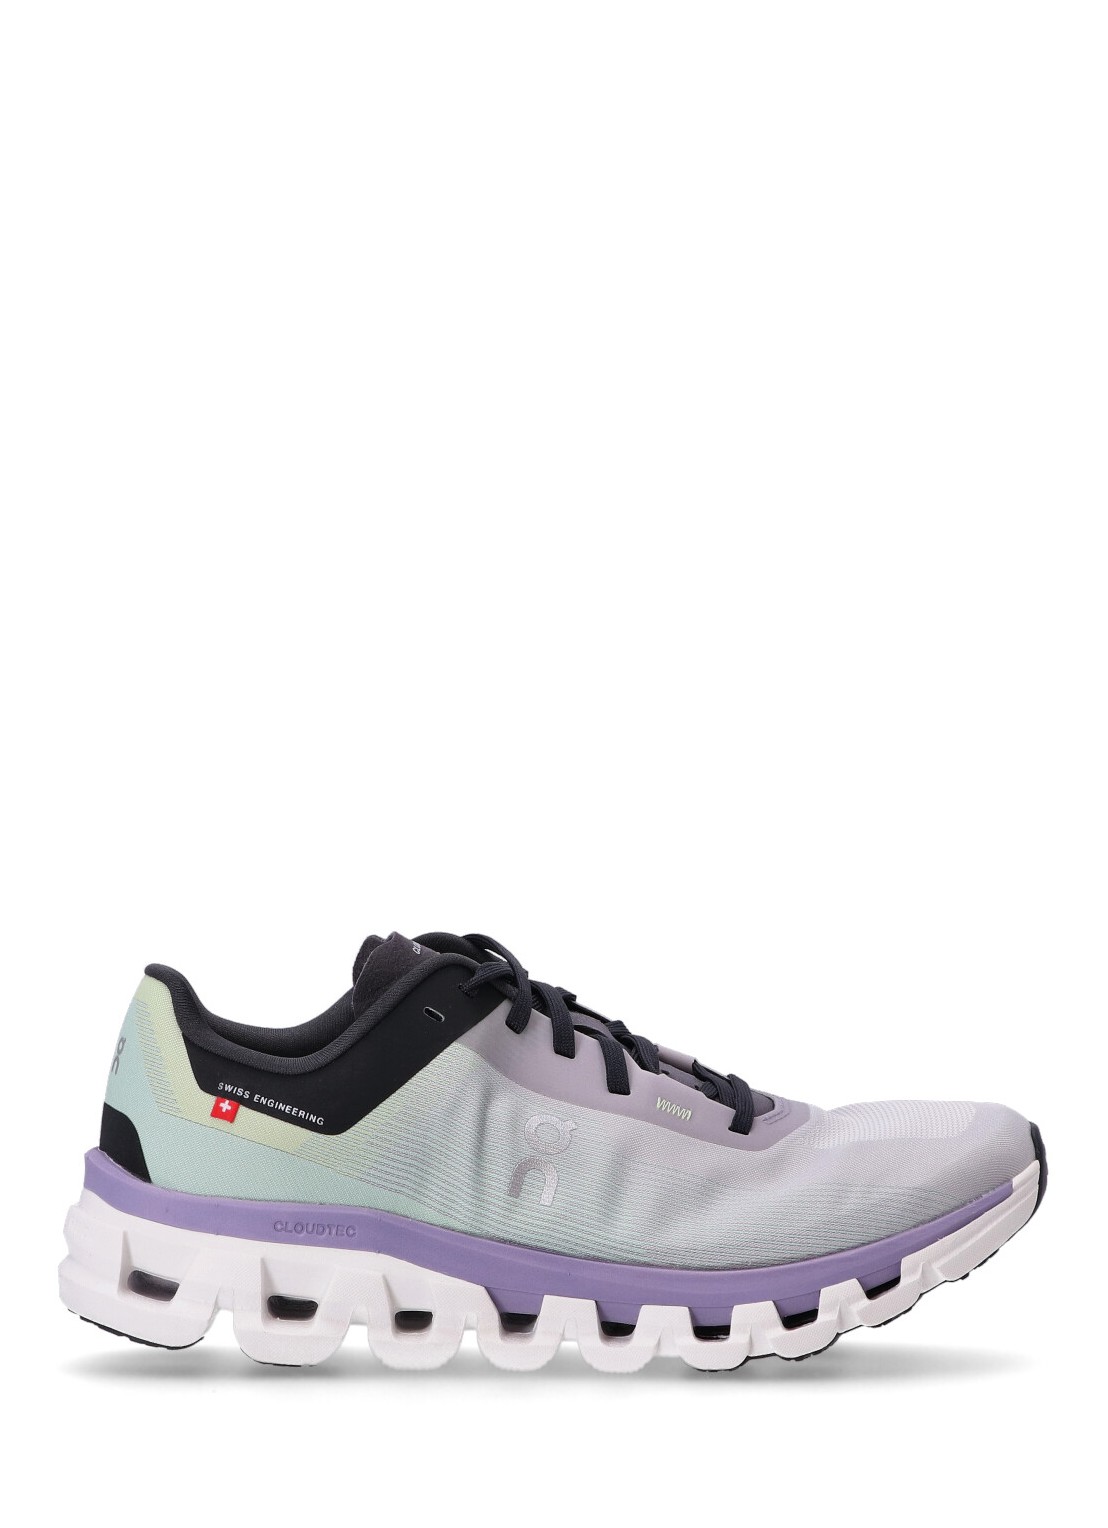 Sneaker on running sneaker woman cloudflow 4 3wd30111501 fade wisteria talla violeta
 